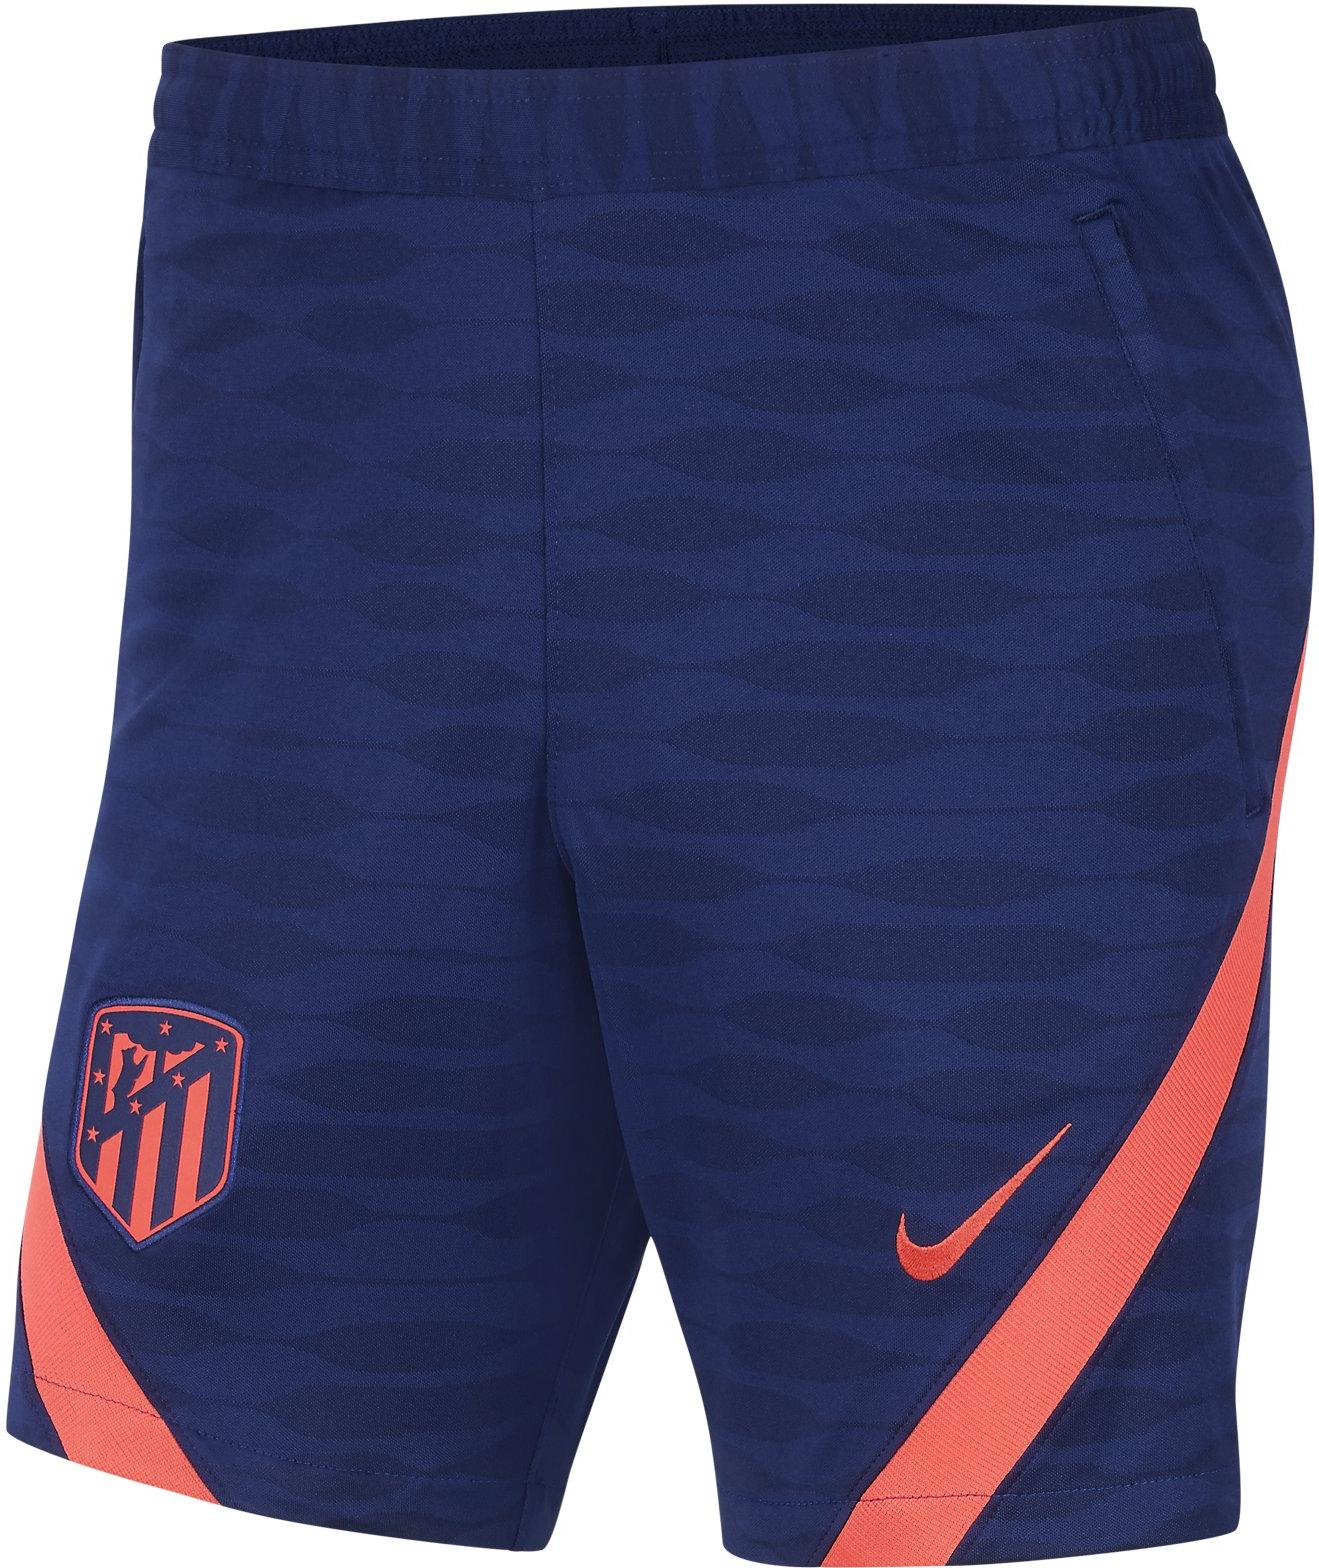 Sorturi Nike Atlético Madrid Strike Men s Dri-FIT Soccer Shorts